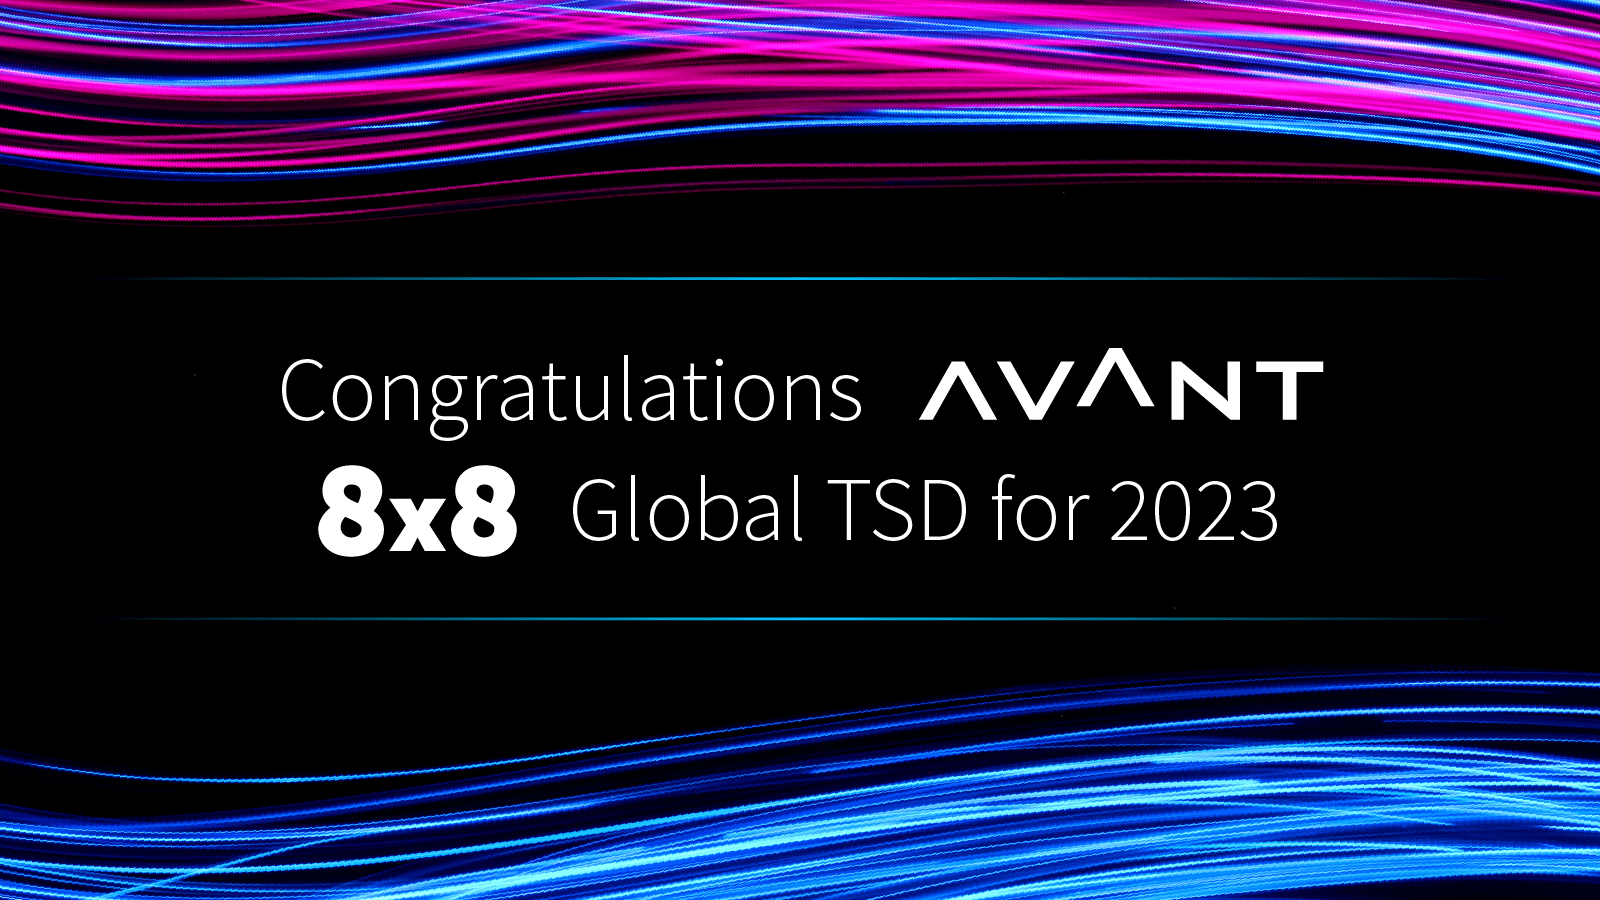 Congratulations Avant 8x8 Global TSD for 2023